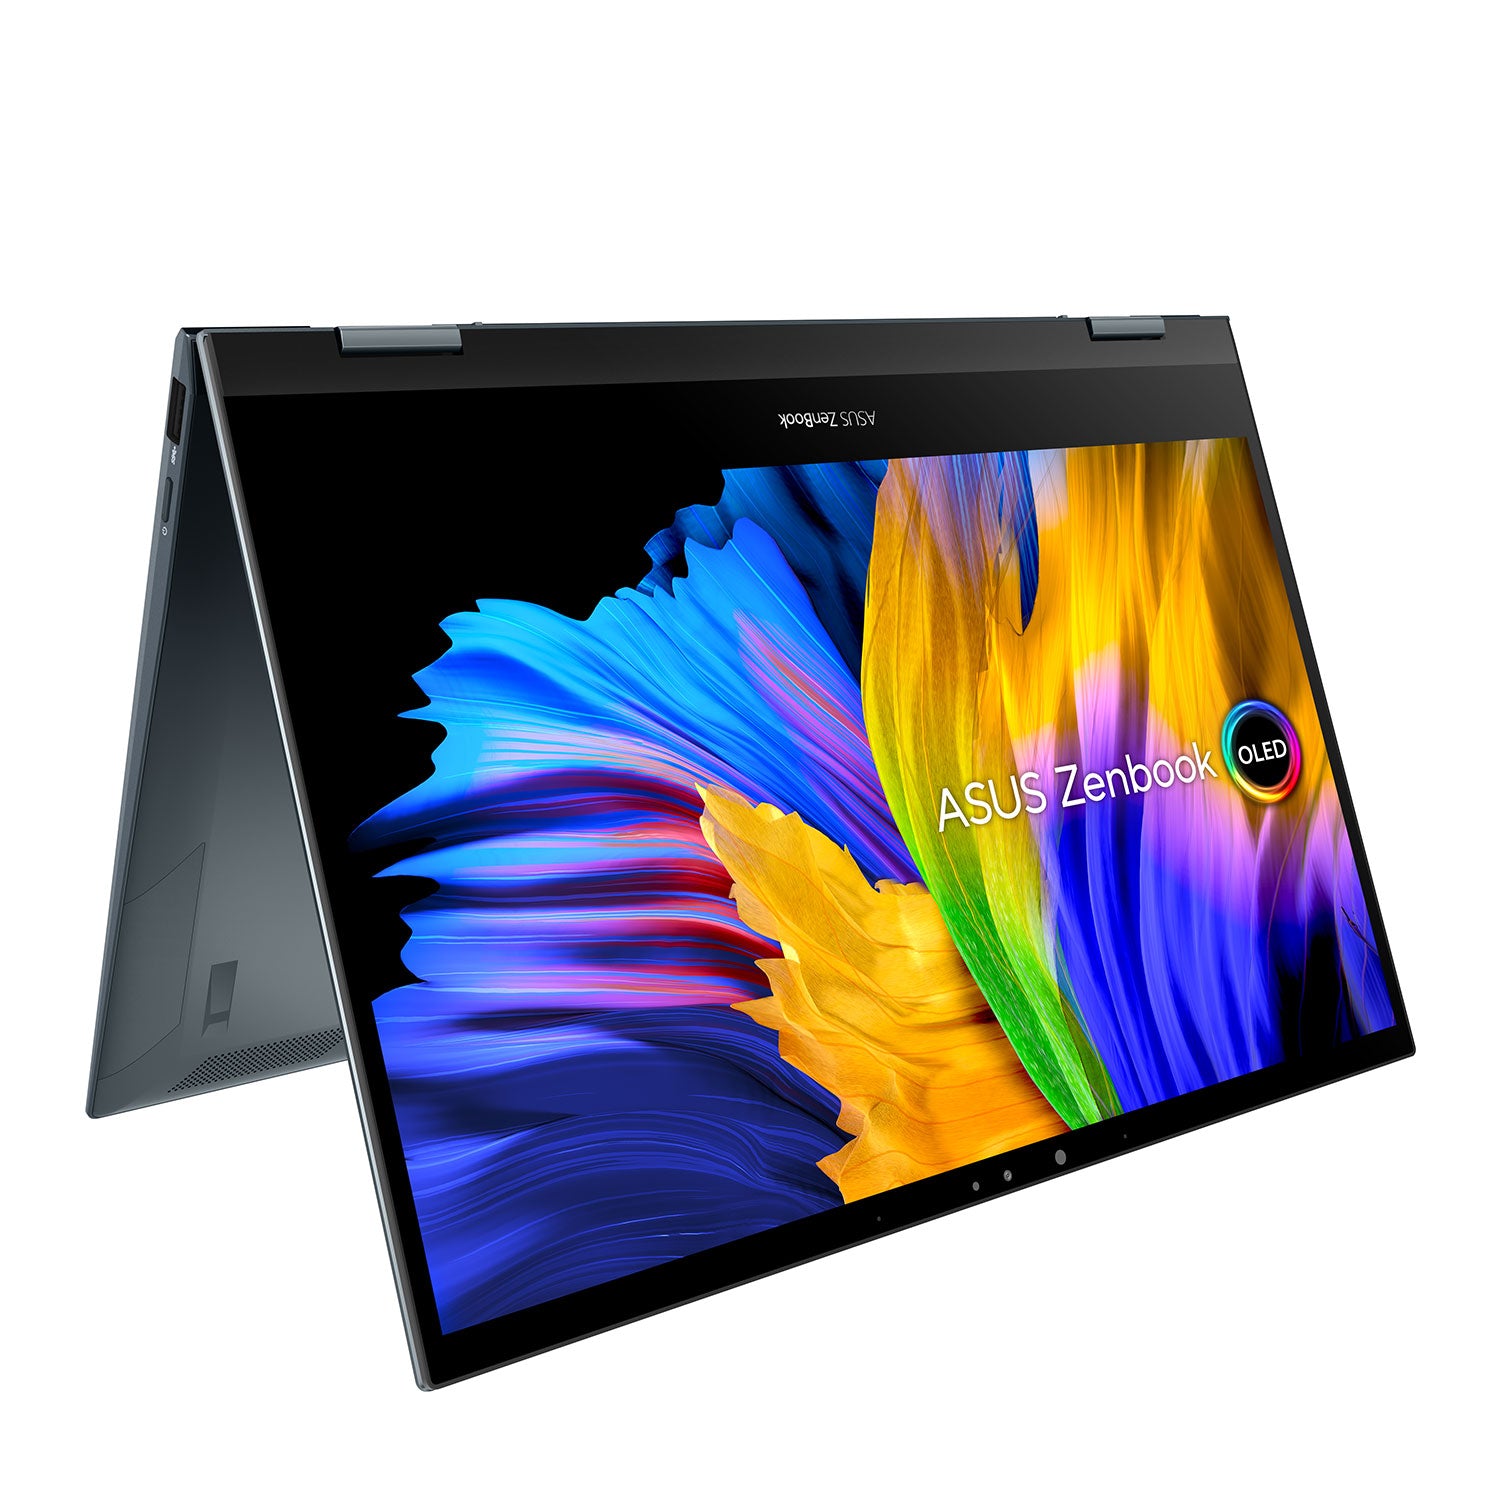 ASUS ZenBook Flip 13" Full HD Intel Core i7 Touchscreen Laptop - Pine Grey